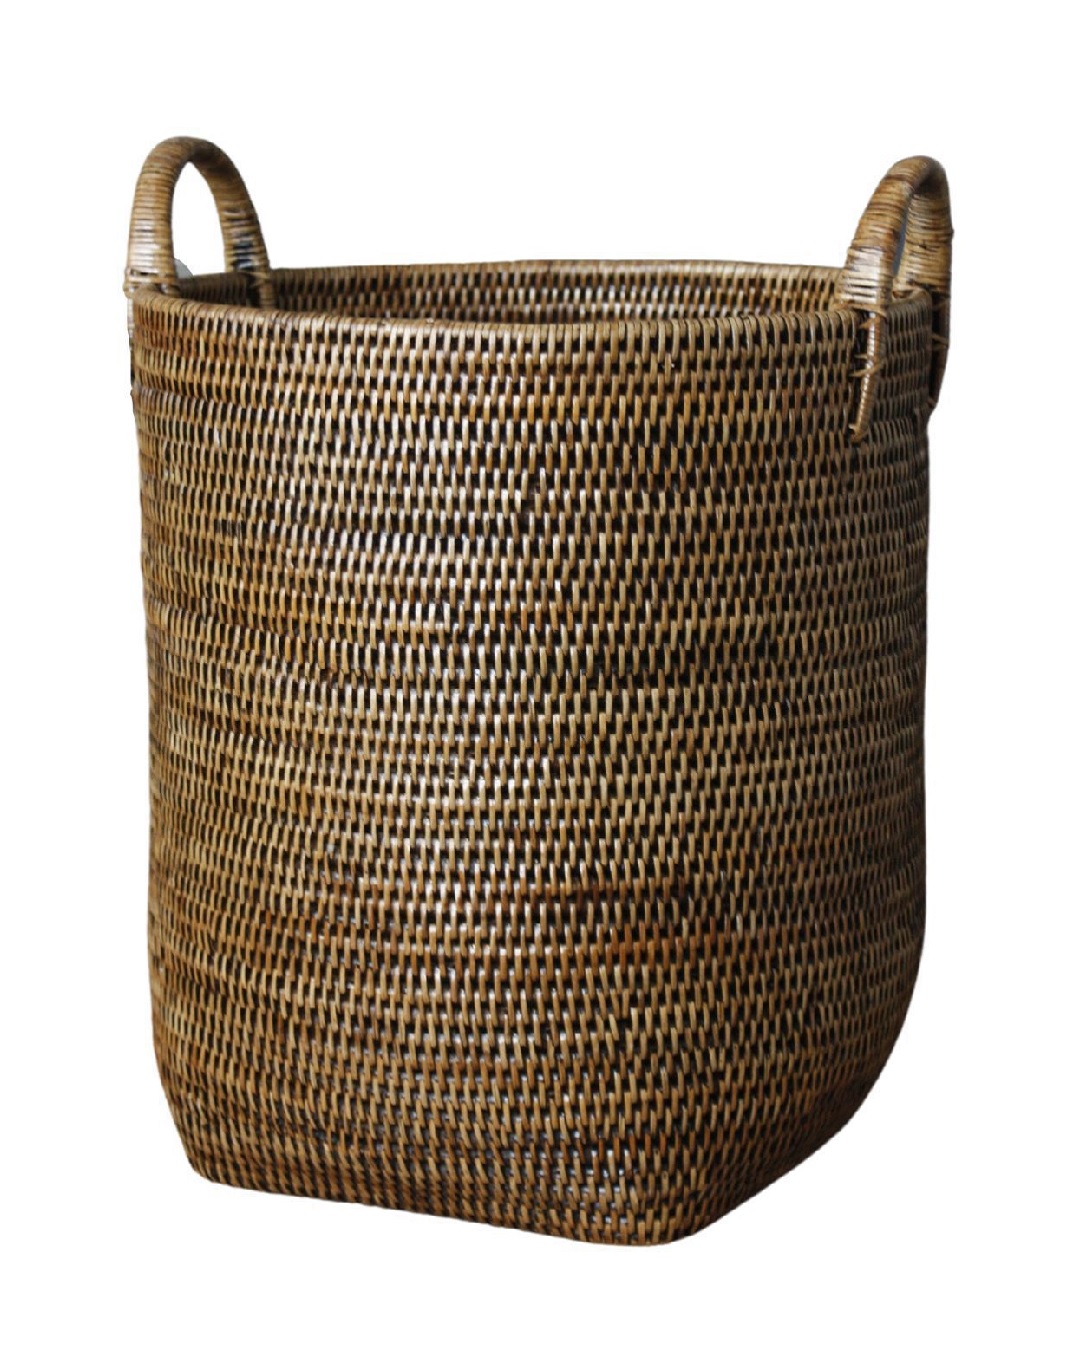 Rattan laundry basket large